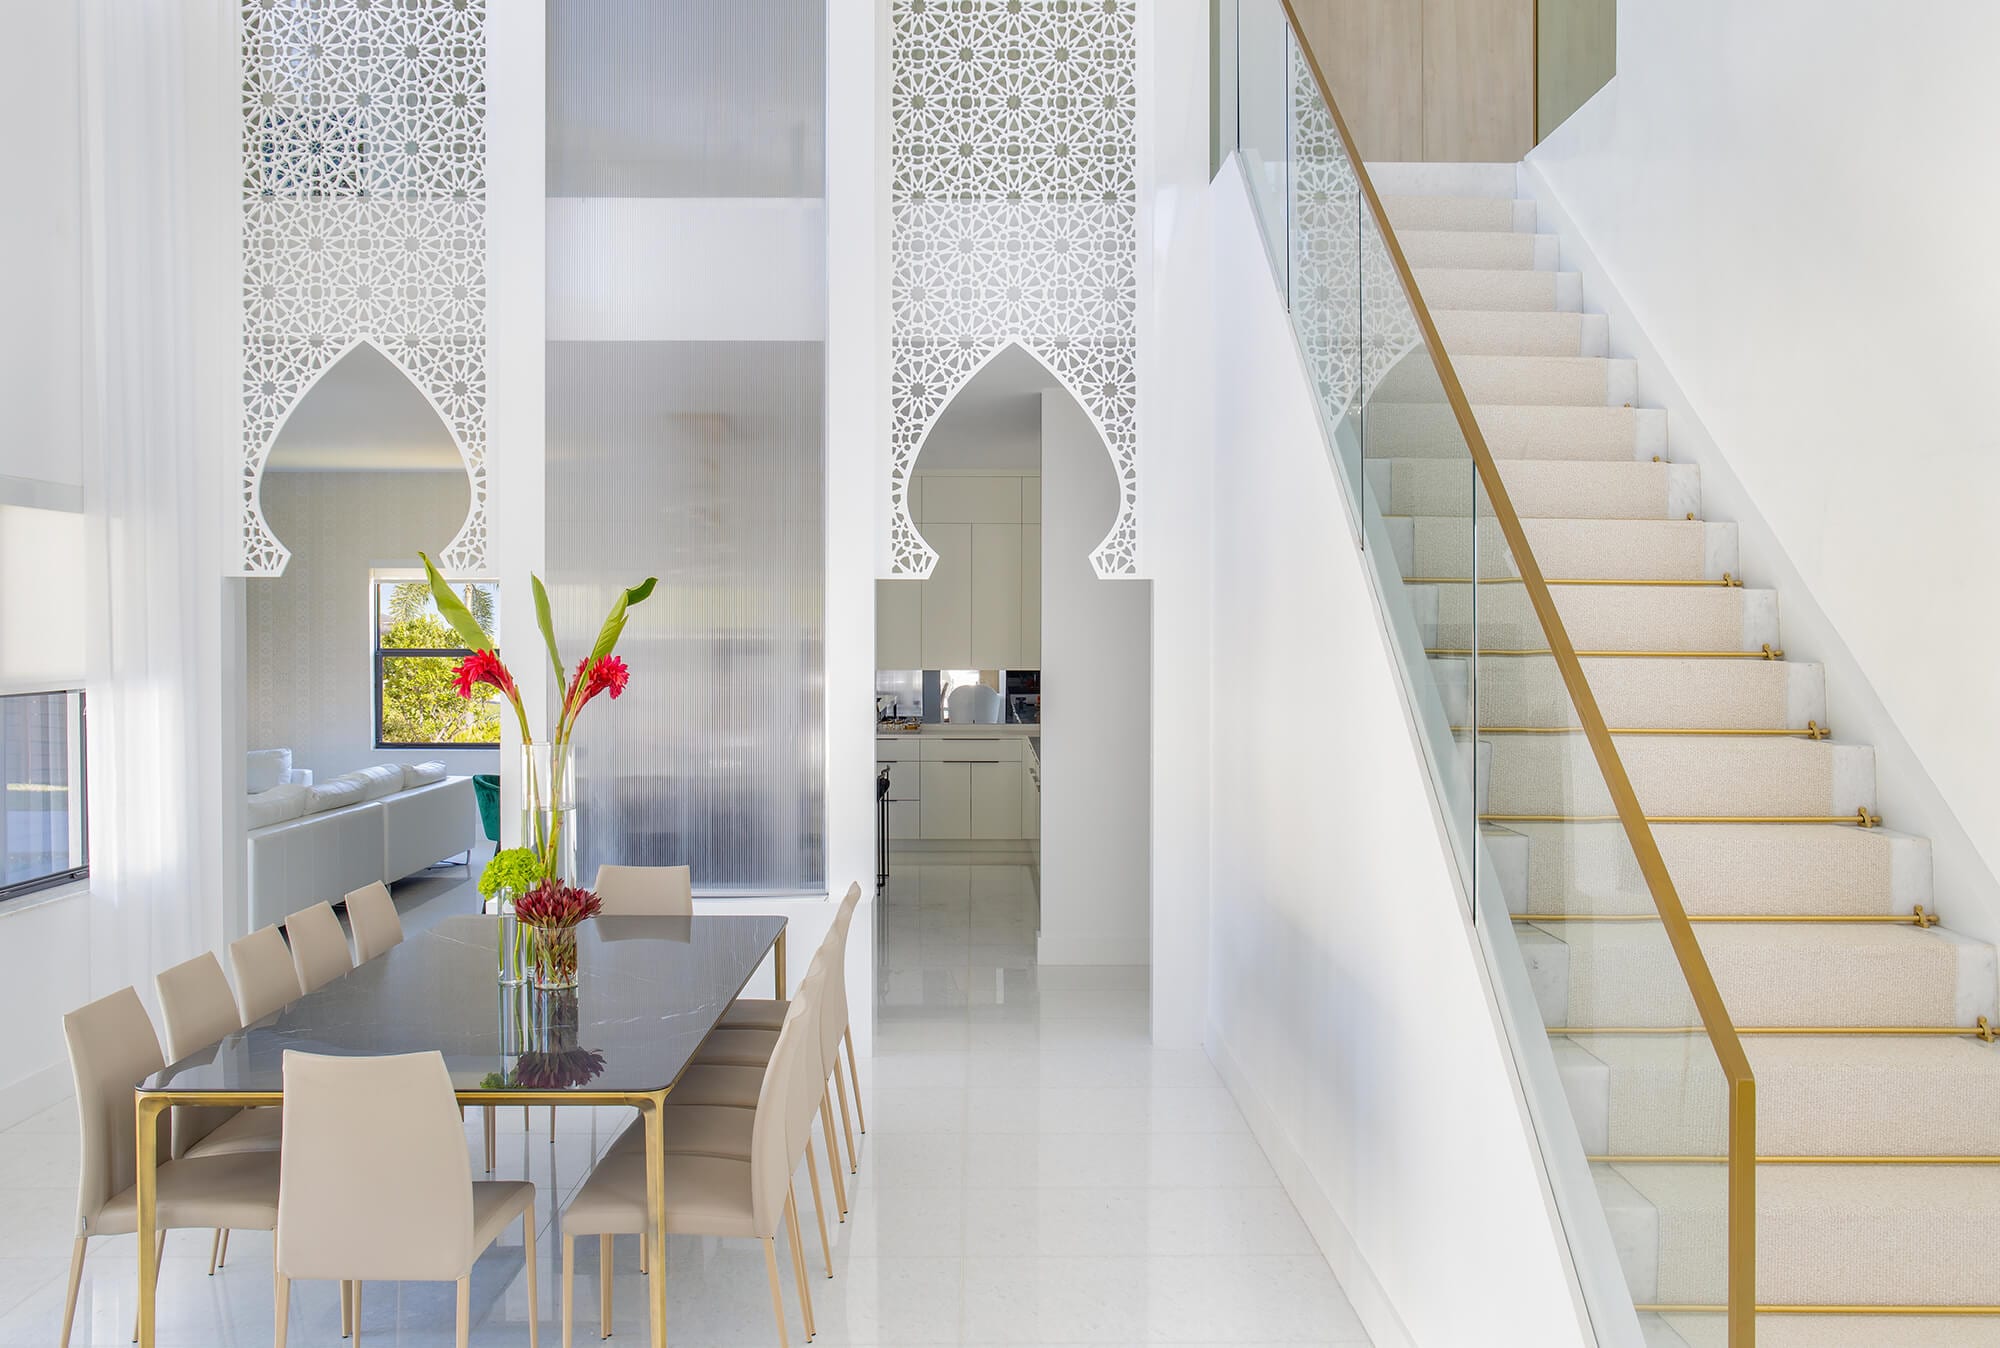 Arabic Residence by Interiors by Maite Granda.